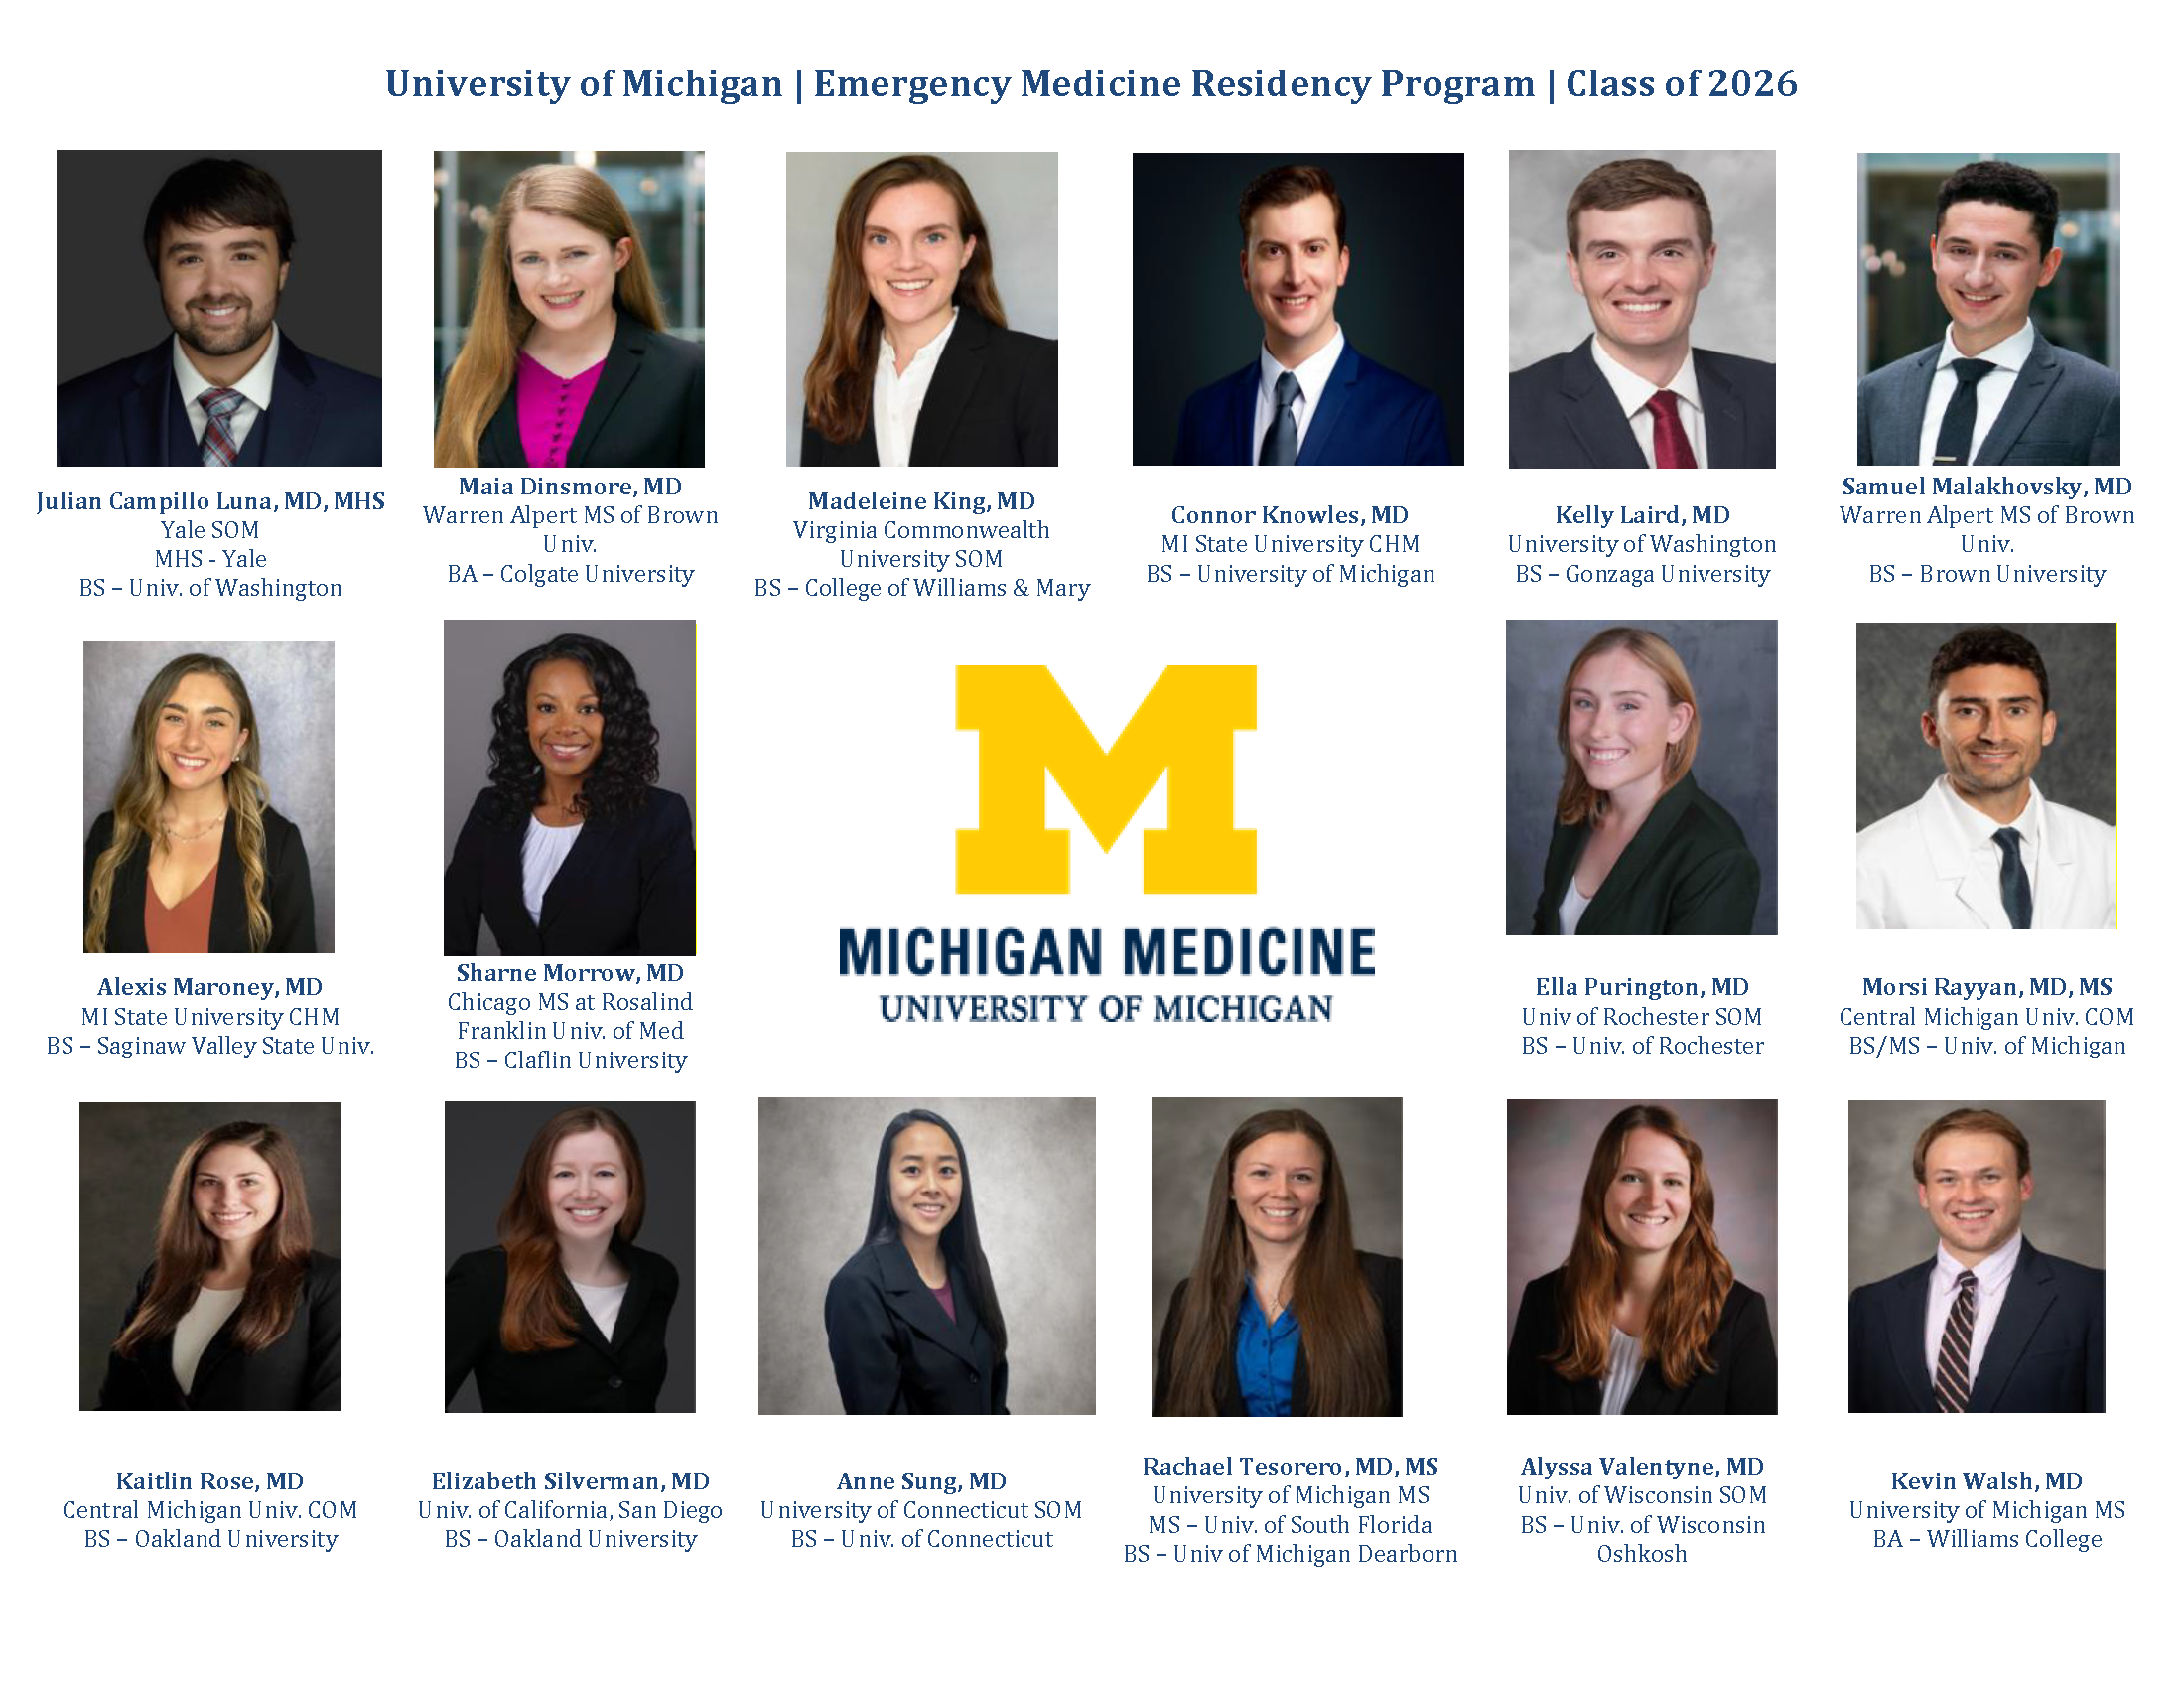 Class of 2026 Emergency Medicine Michigan Medicine